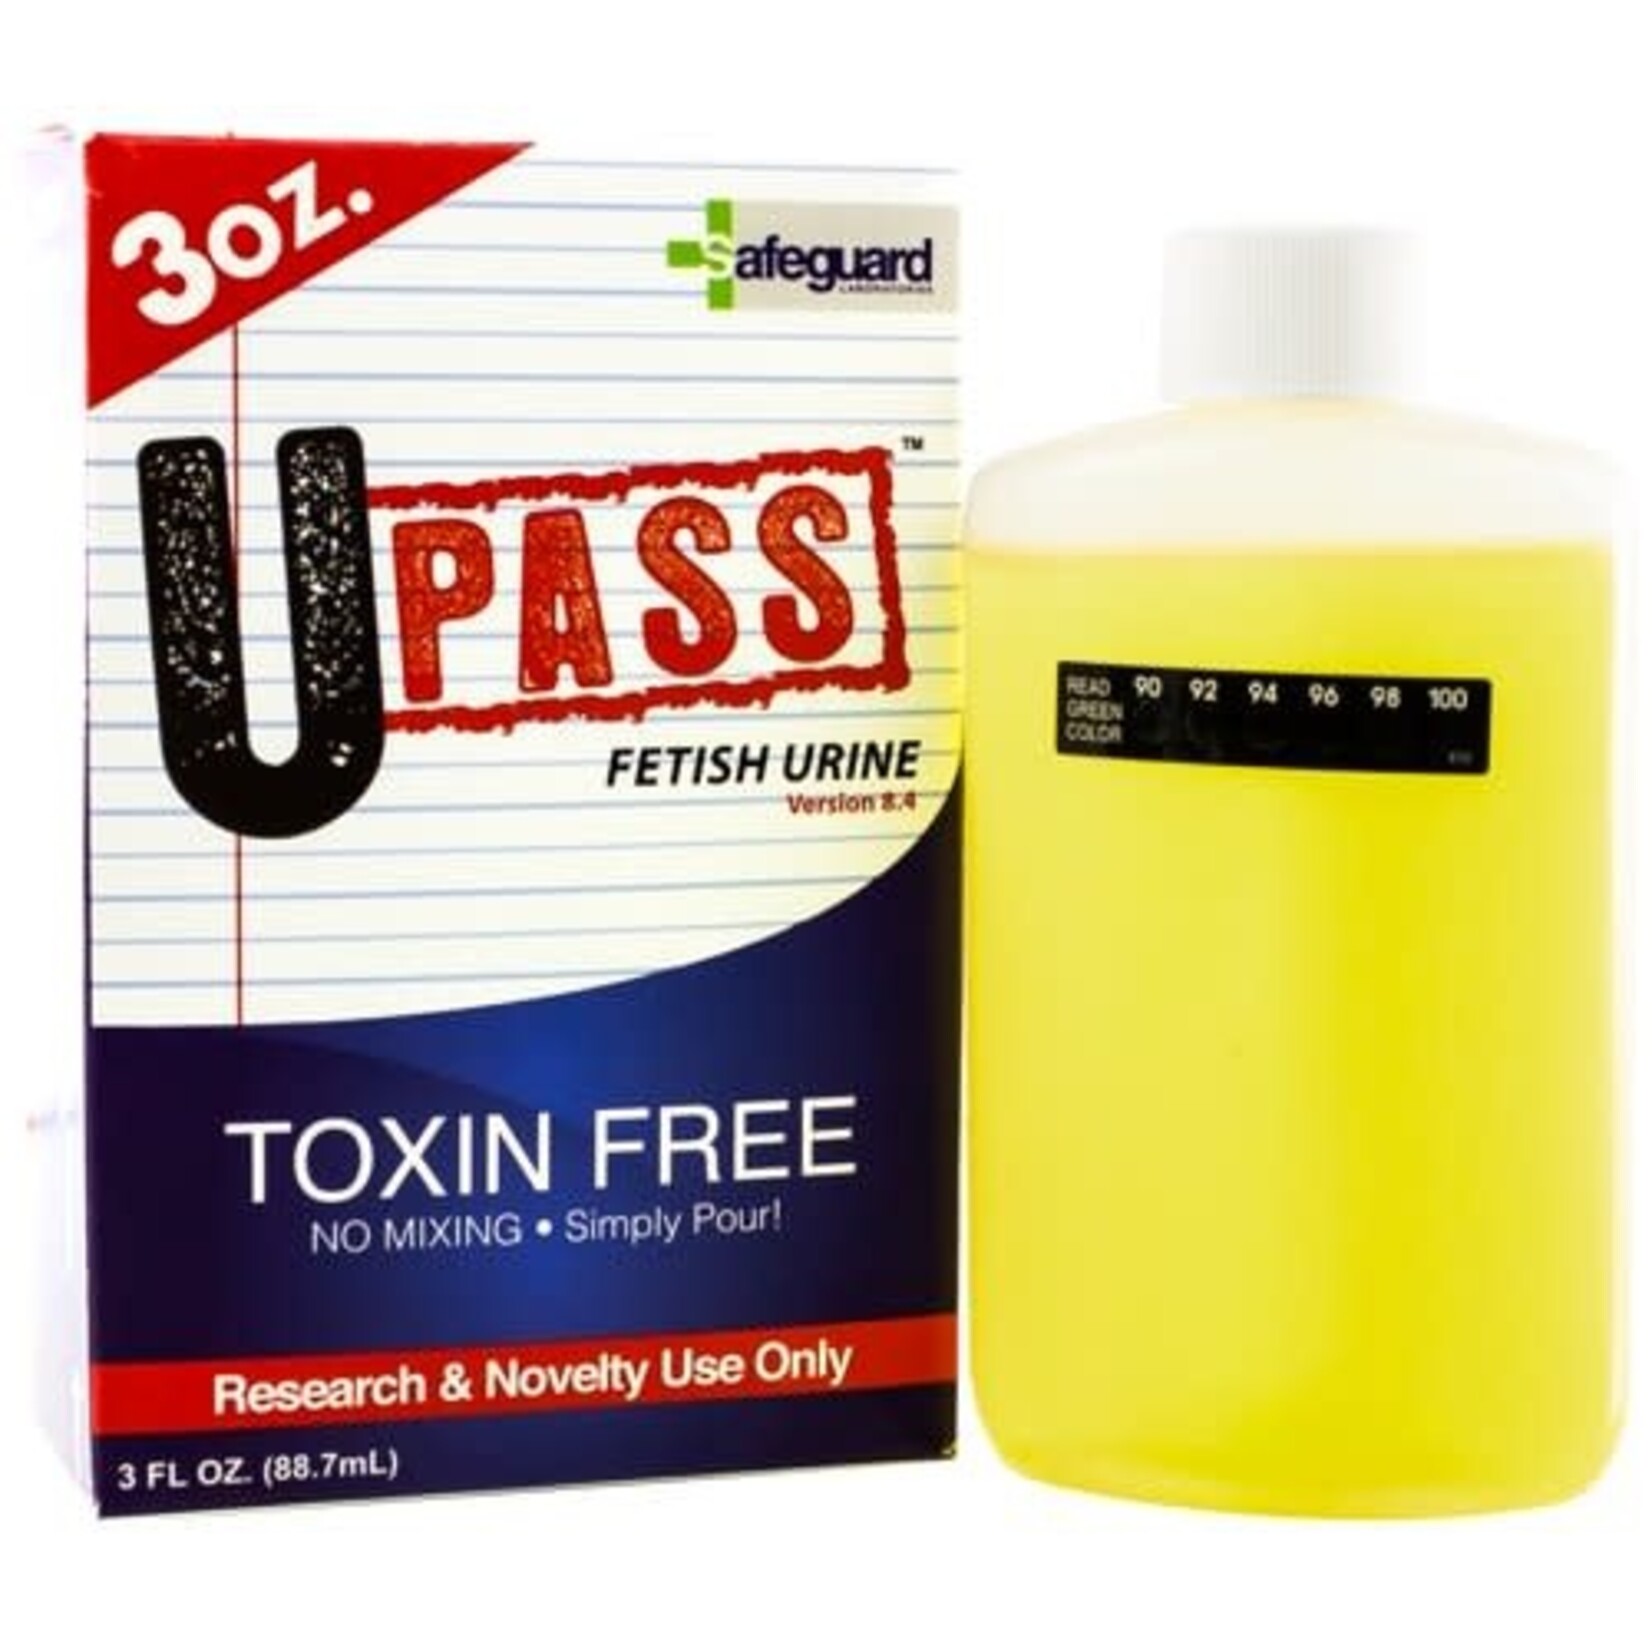 Safeguard U-Pass Synthetic Urine